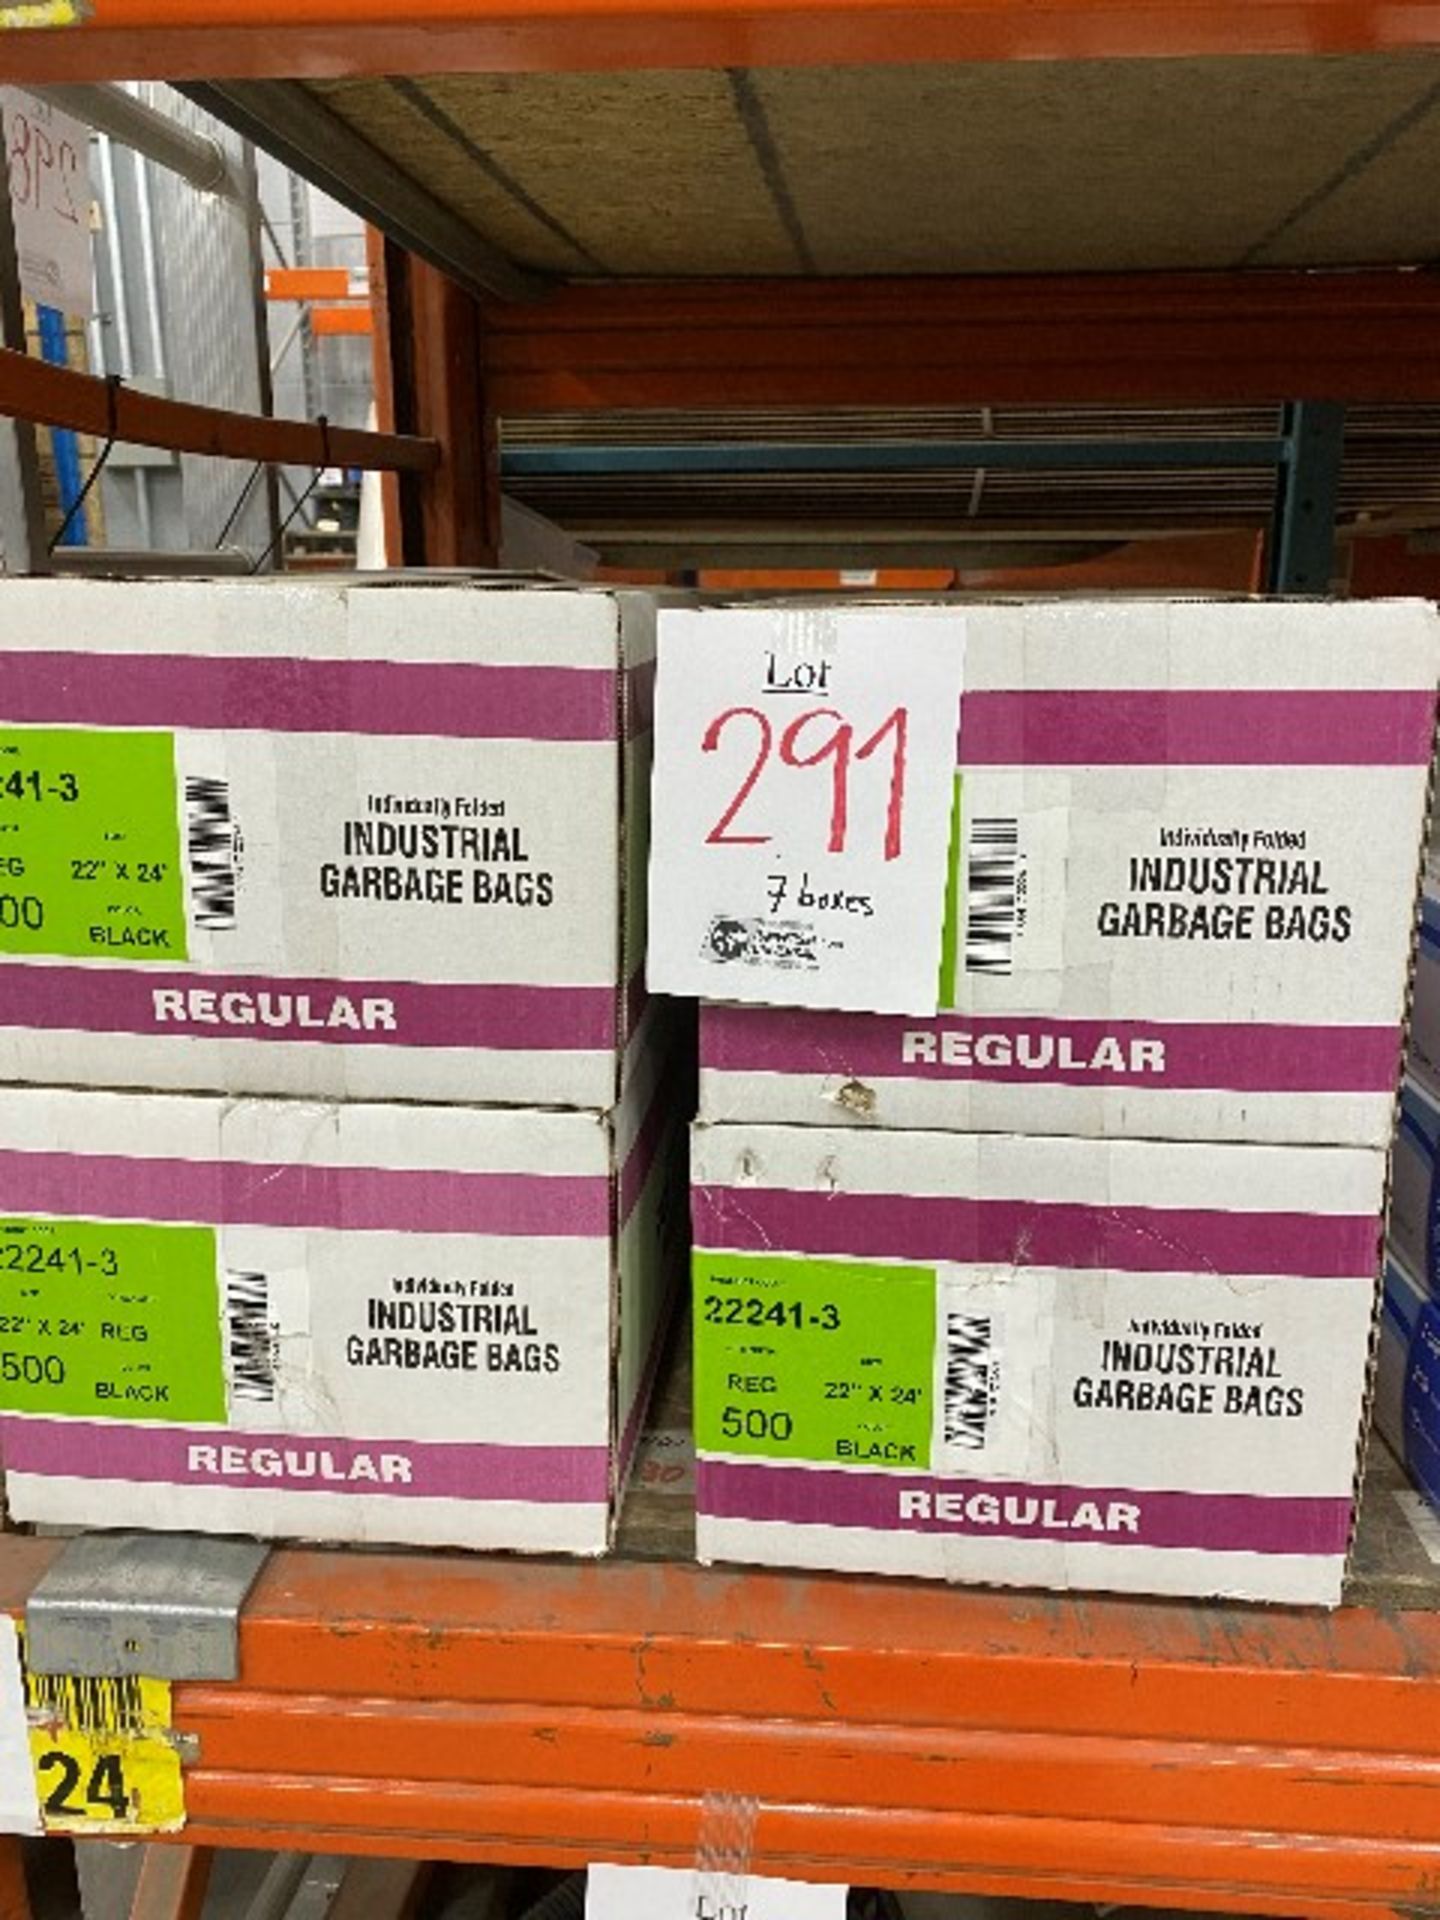 Industrial garbage bags,22” x 24”, 500pcs per box, 7 boxes